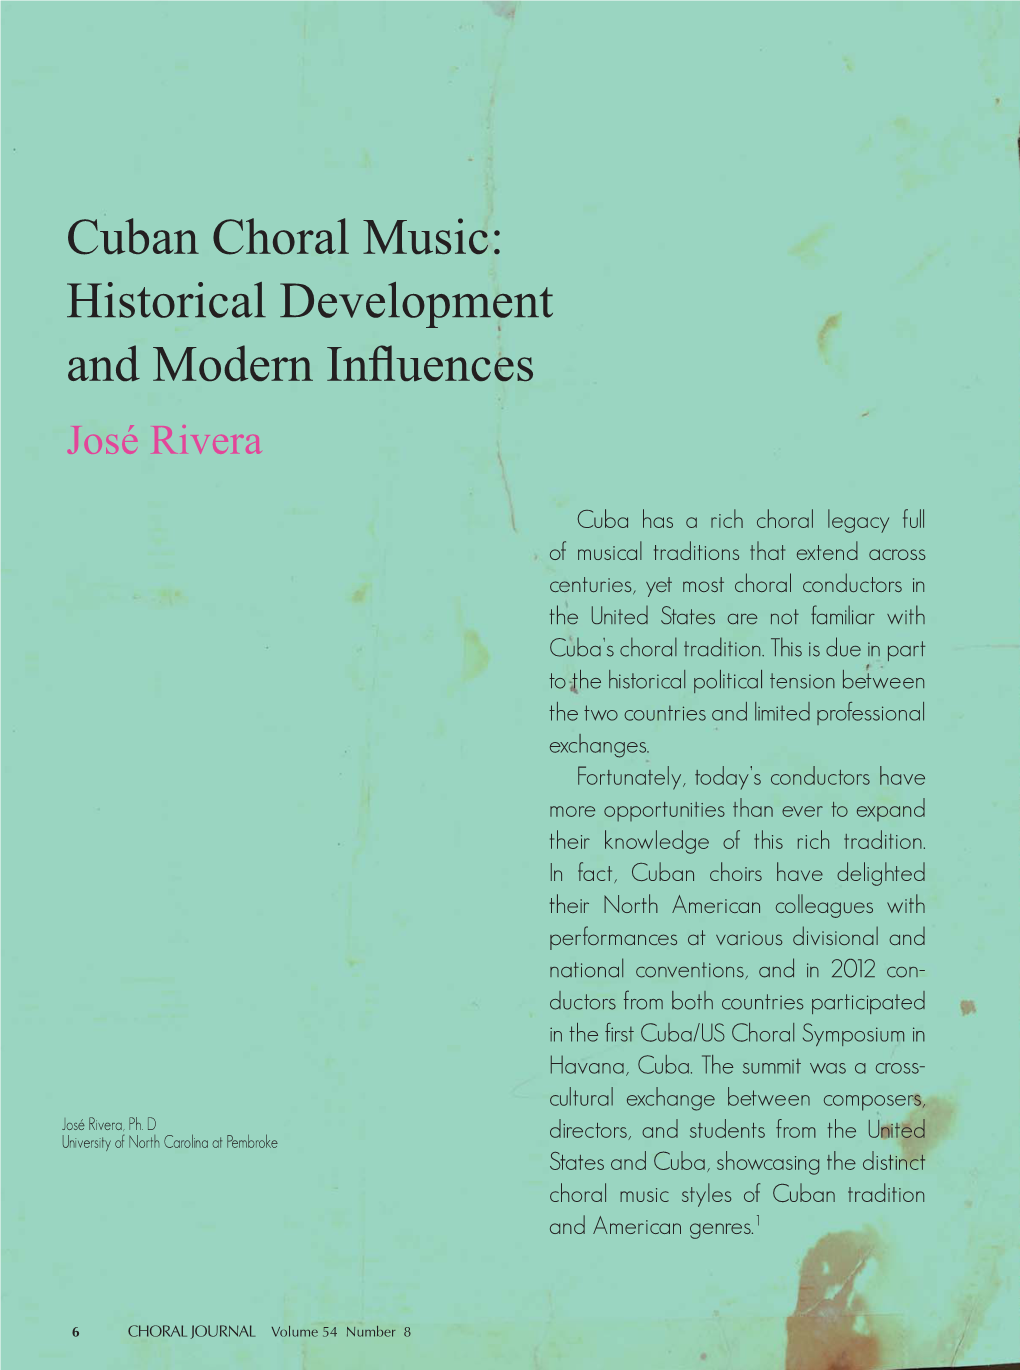 Cuban Choral Music: Historical Development and Modern Influences